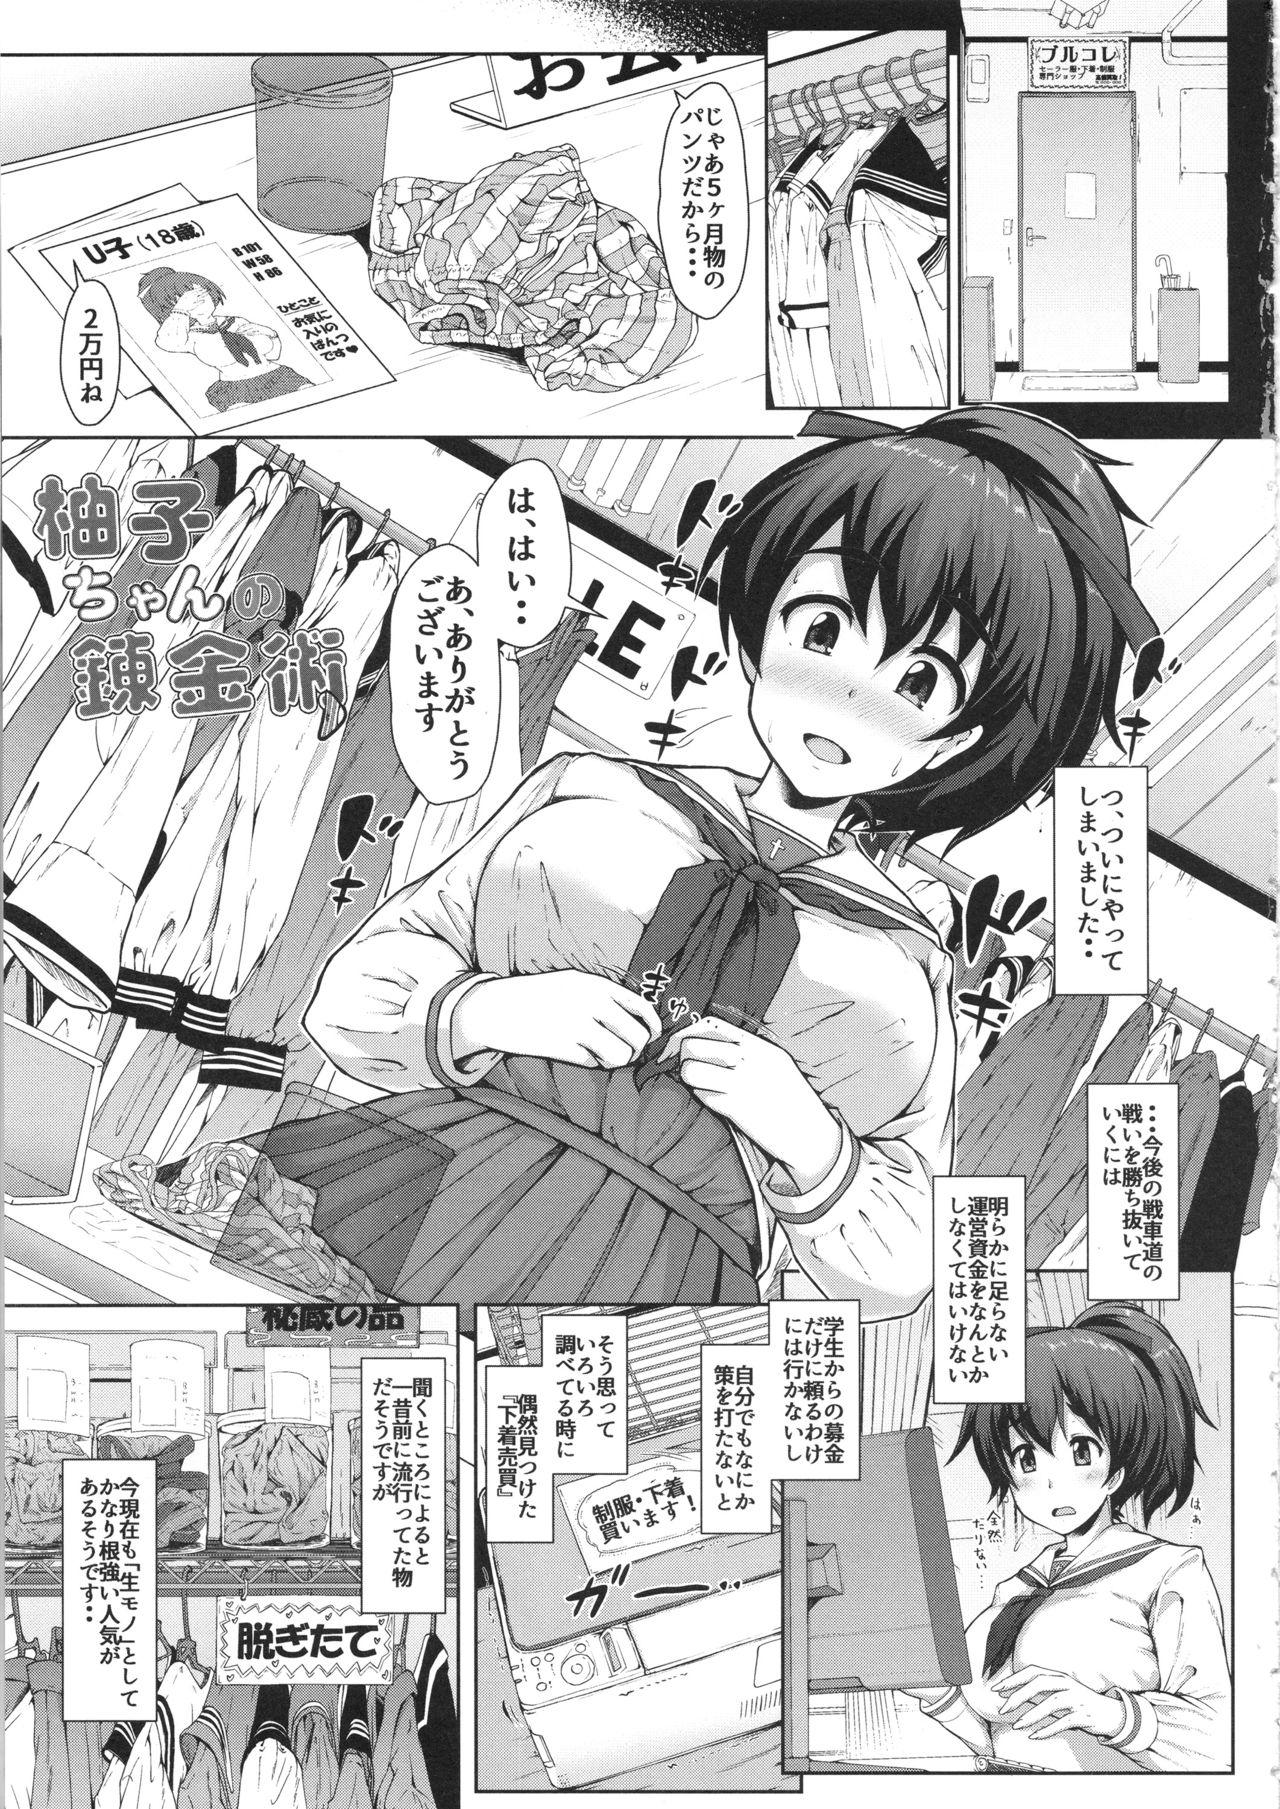 Gays Yuzu-chan no Renkinjutsu - Girls und panzer 3some - Page 2